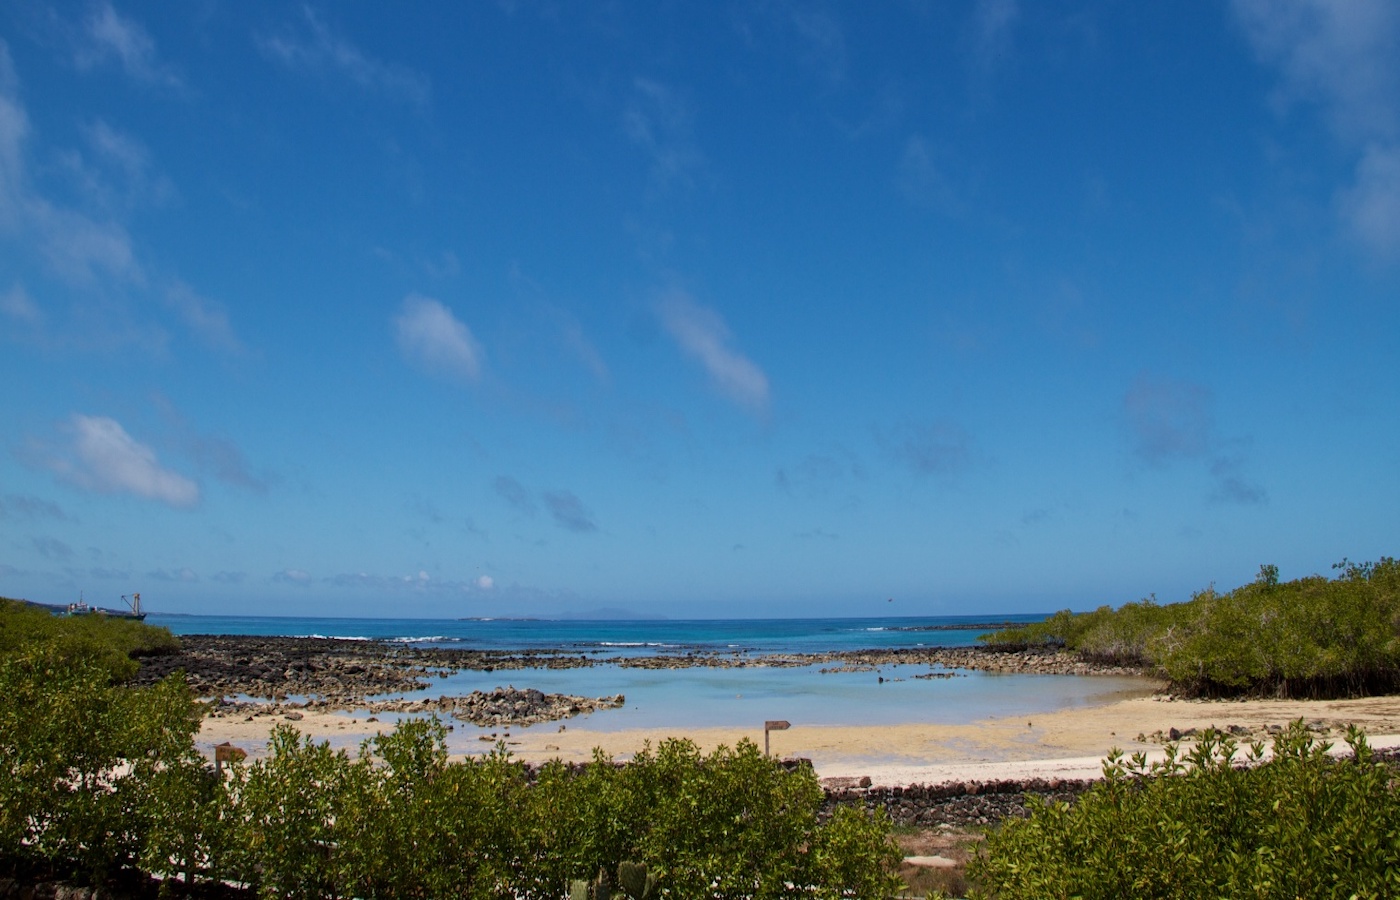 The beautiful beach at Finch Bay - Galapagos Islands